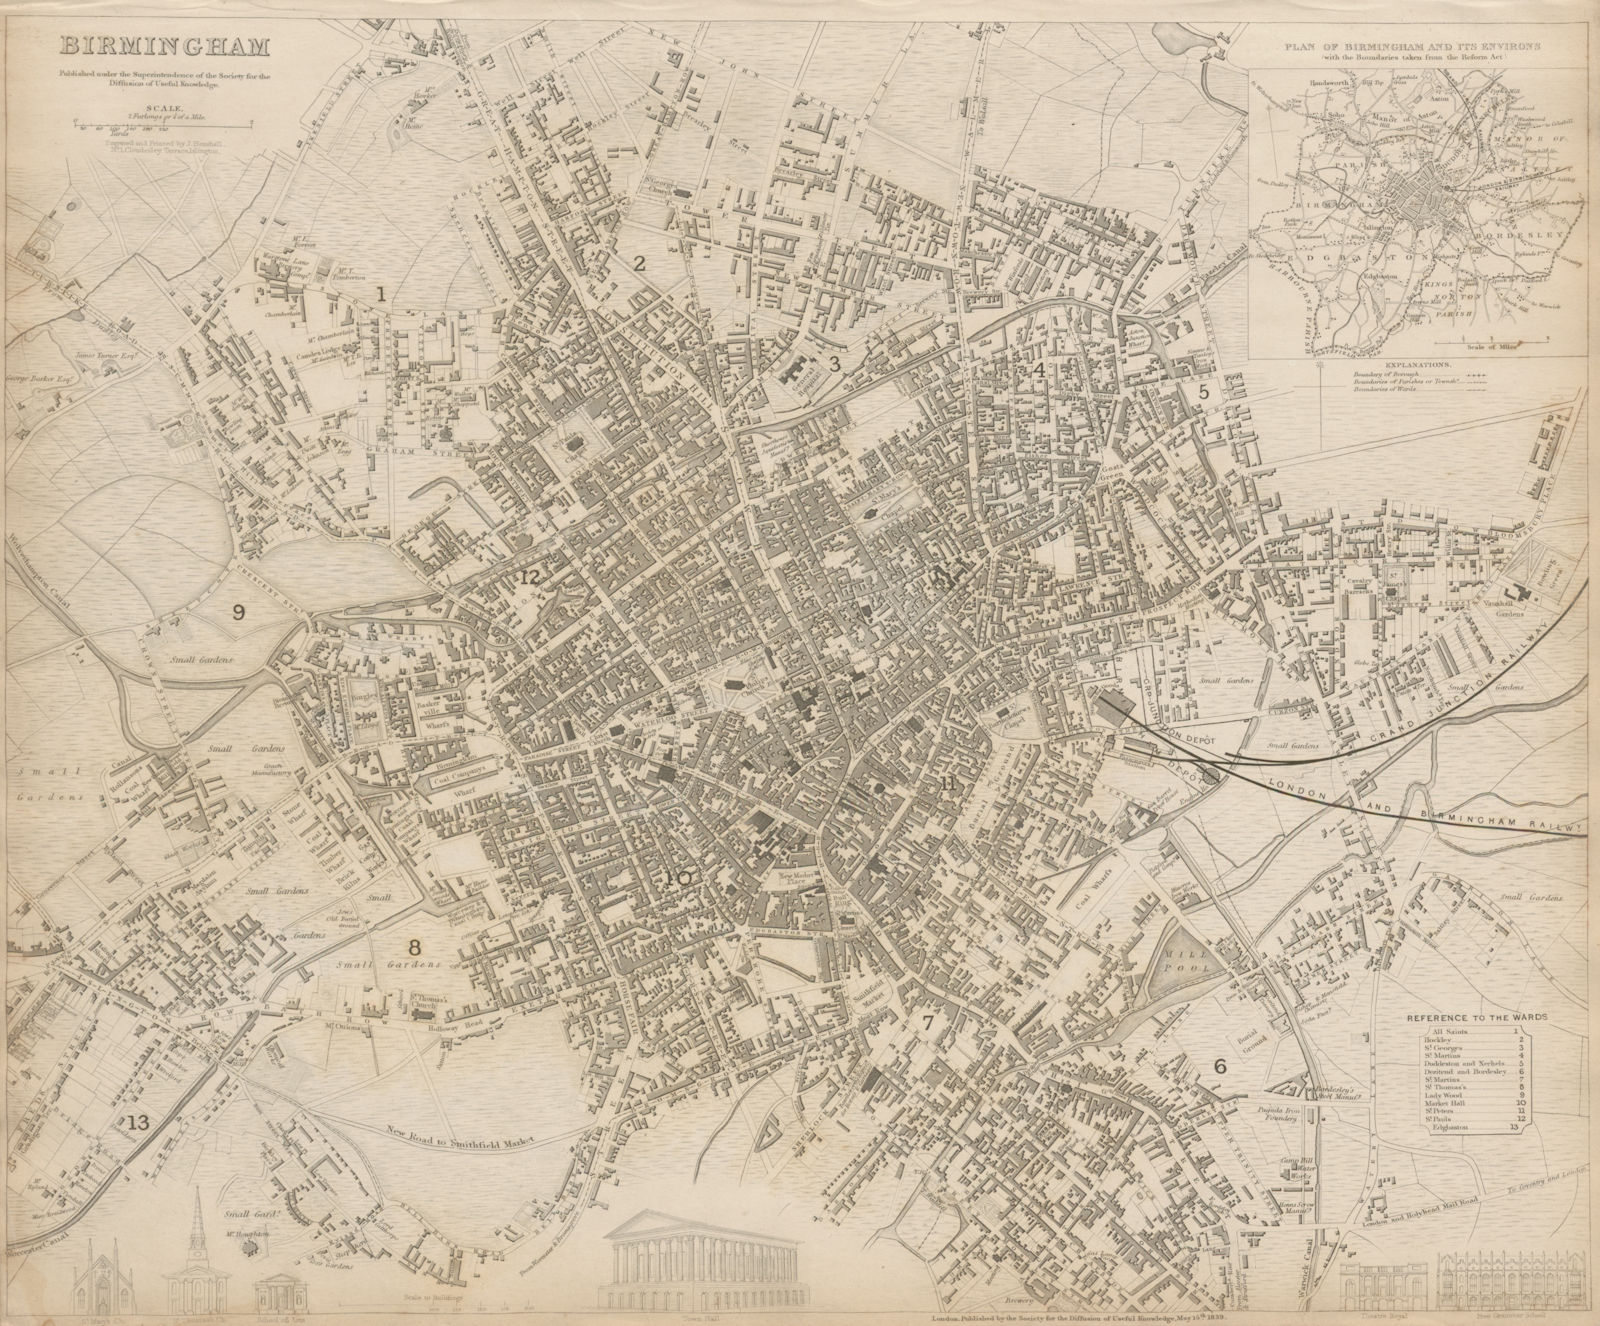 Associate Product BIRMINGHAM antique town city map plan. Inset environs of Birmingham. SDUK 1844